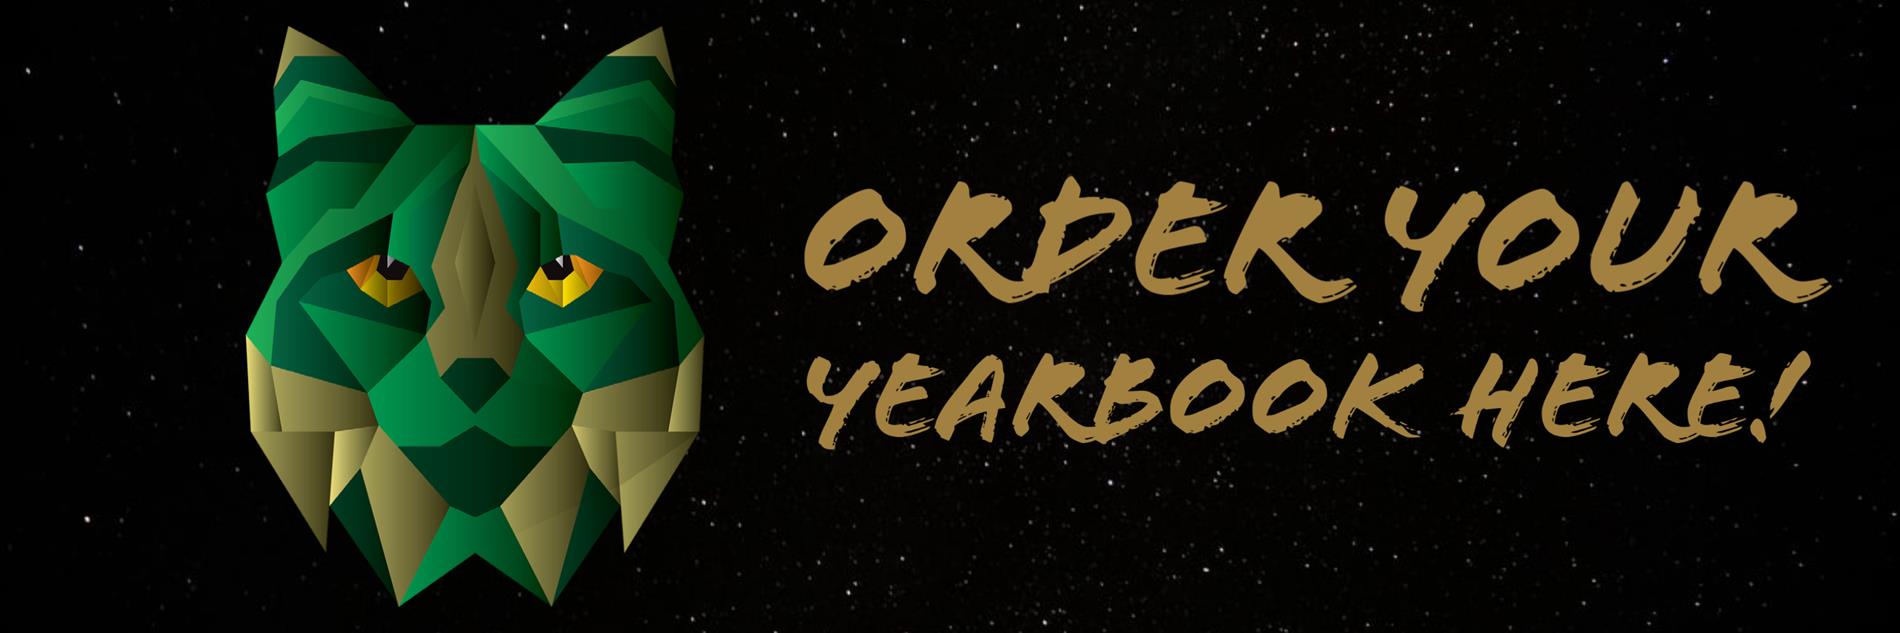 yearbook order link